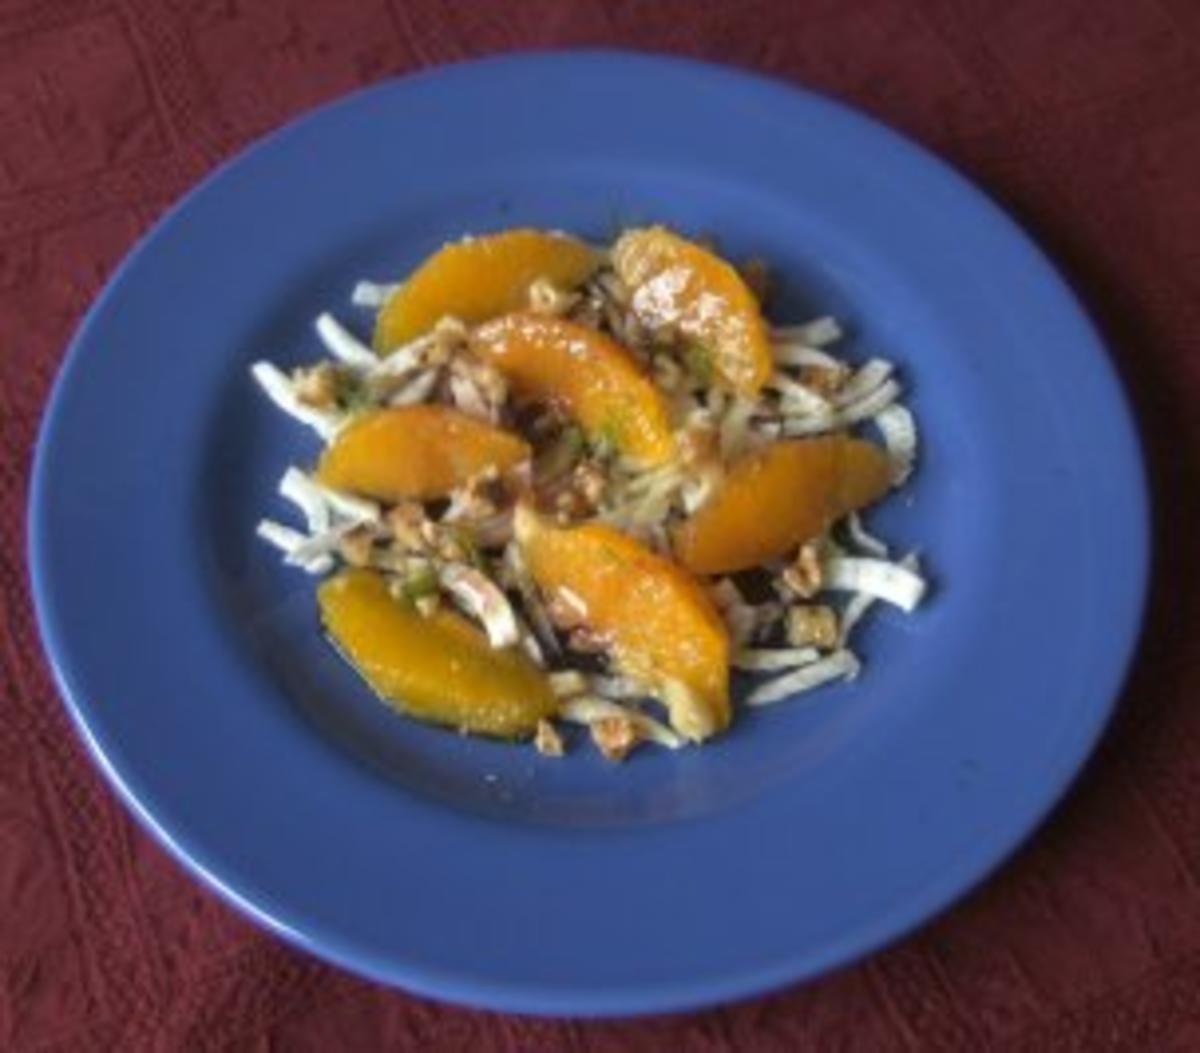 Fenchel - Orangen - Salat - Rezept